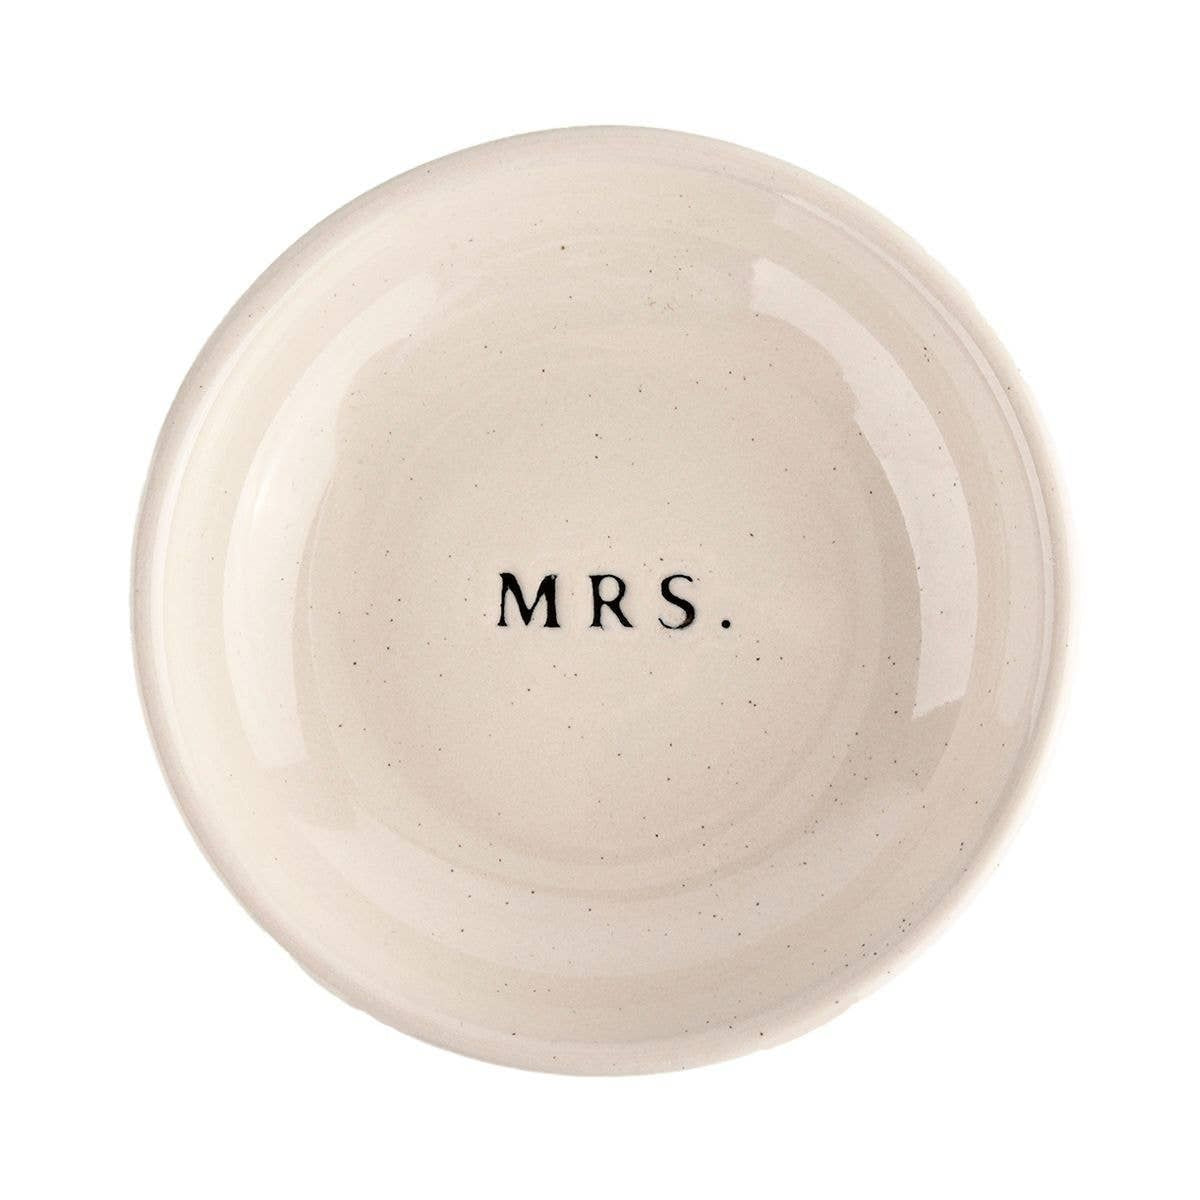 Mrs. Dish Ceramic Jewelry Dish